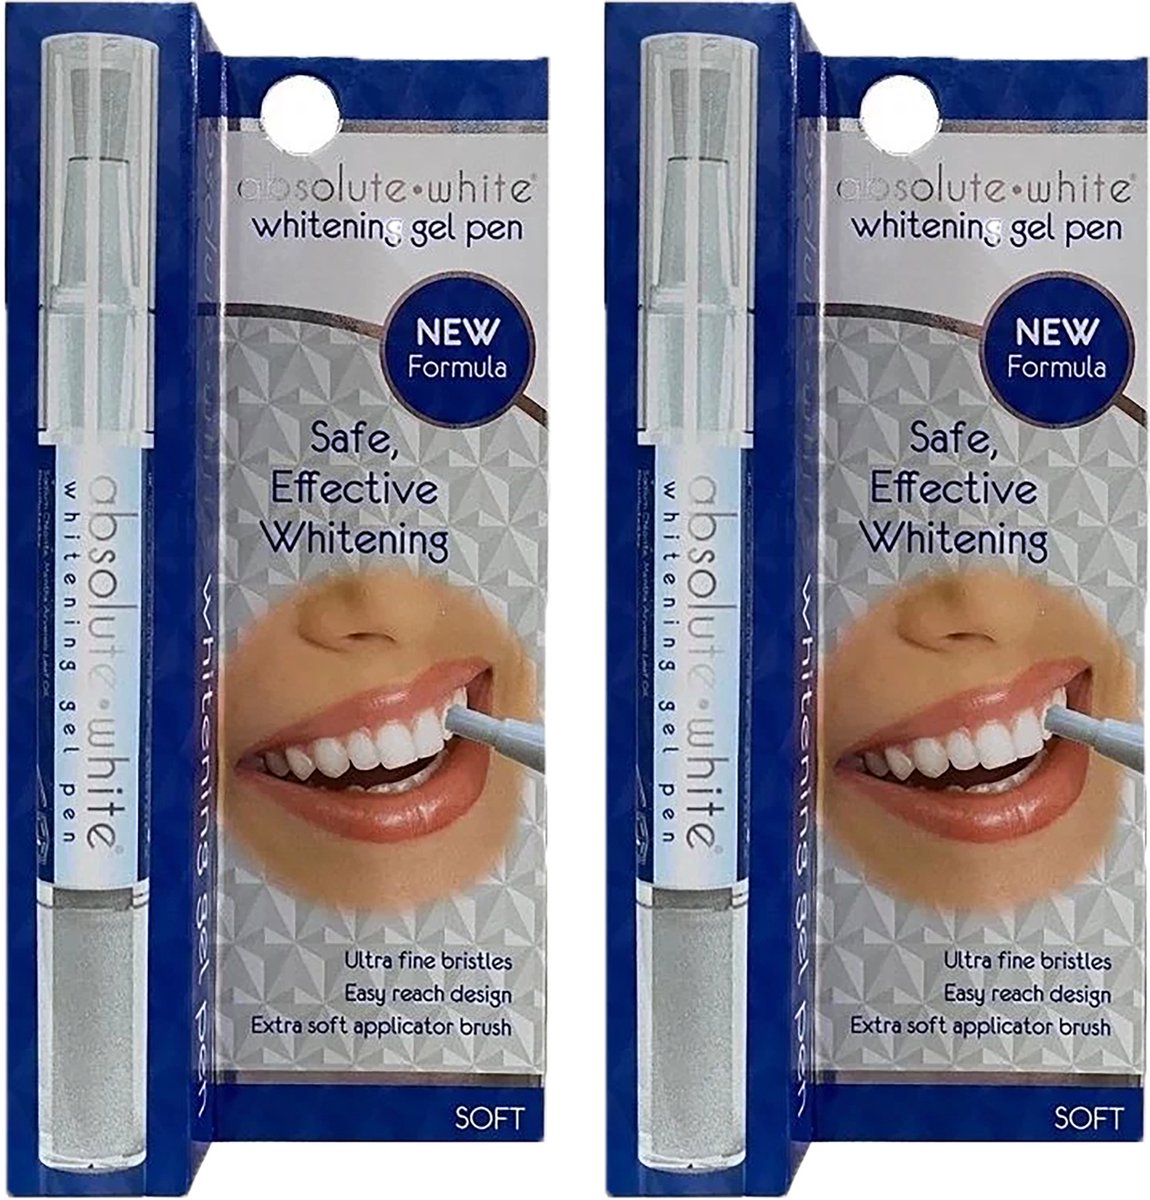 Tanden whitening gel pen 2x